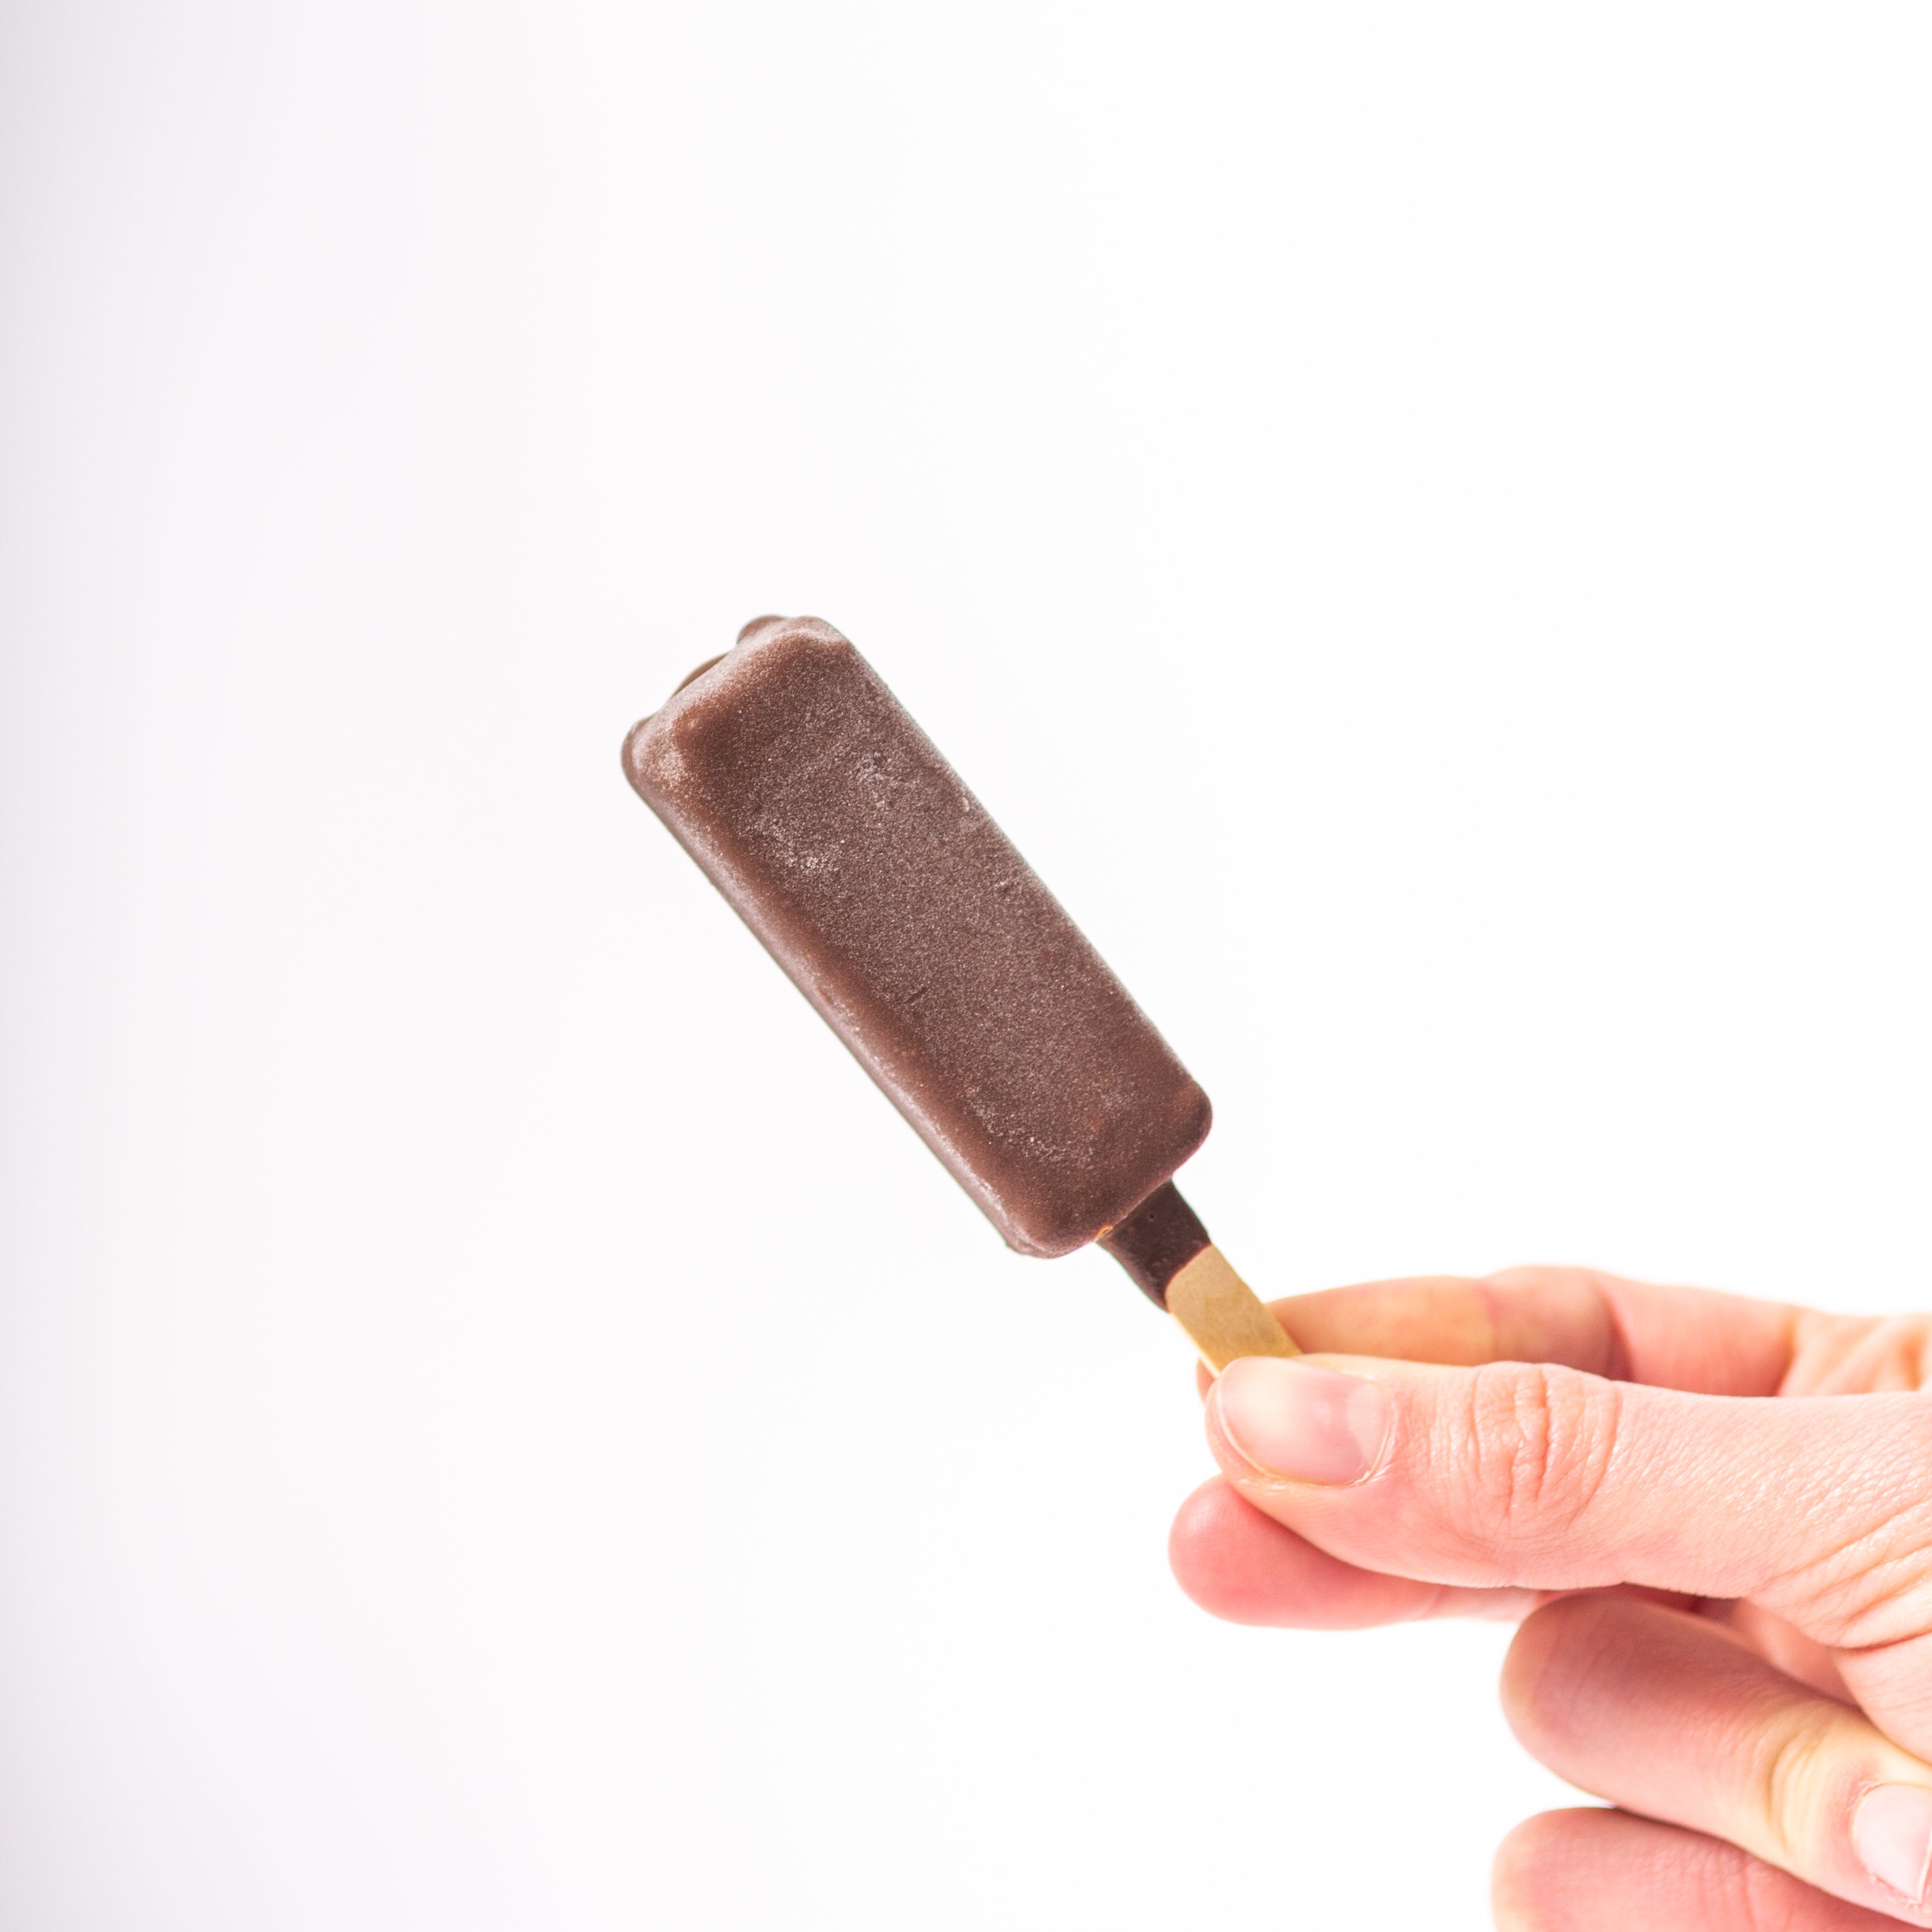 Mini Frisco vanille omhuld met fondant chocolade - 80st